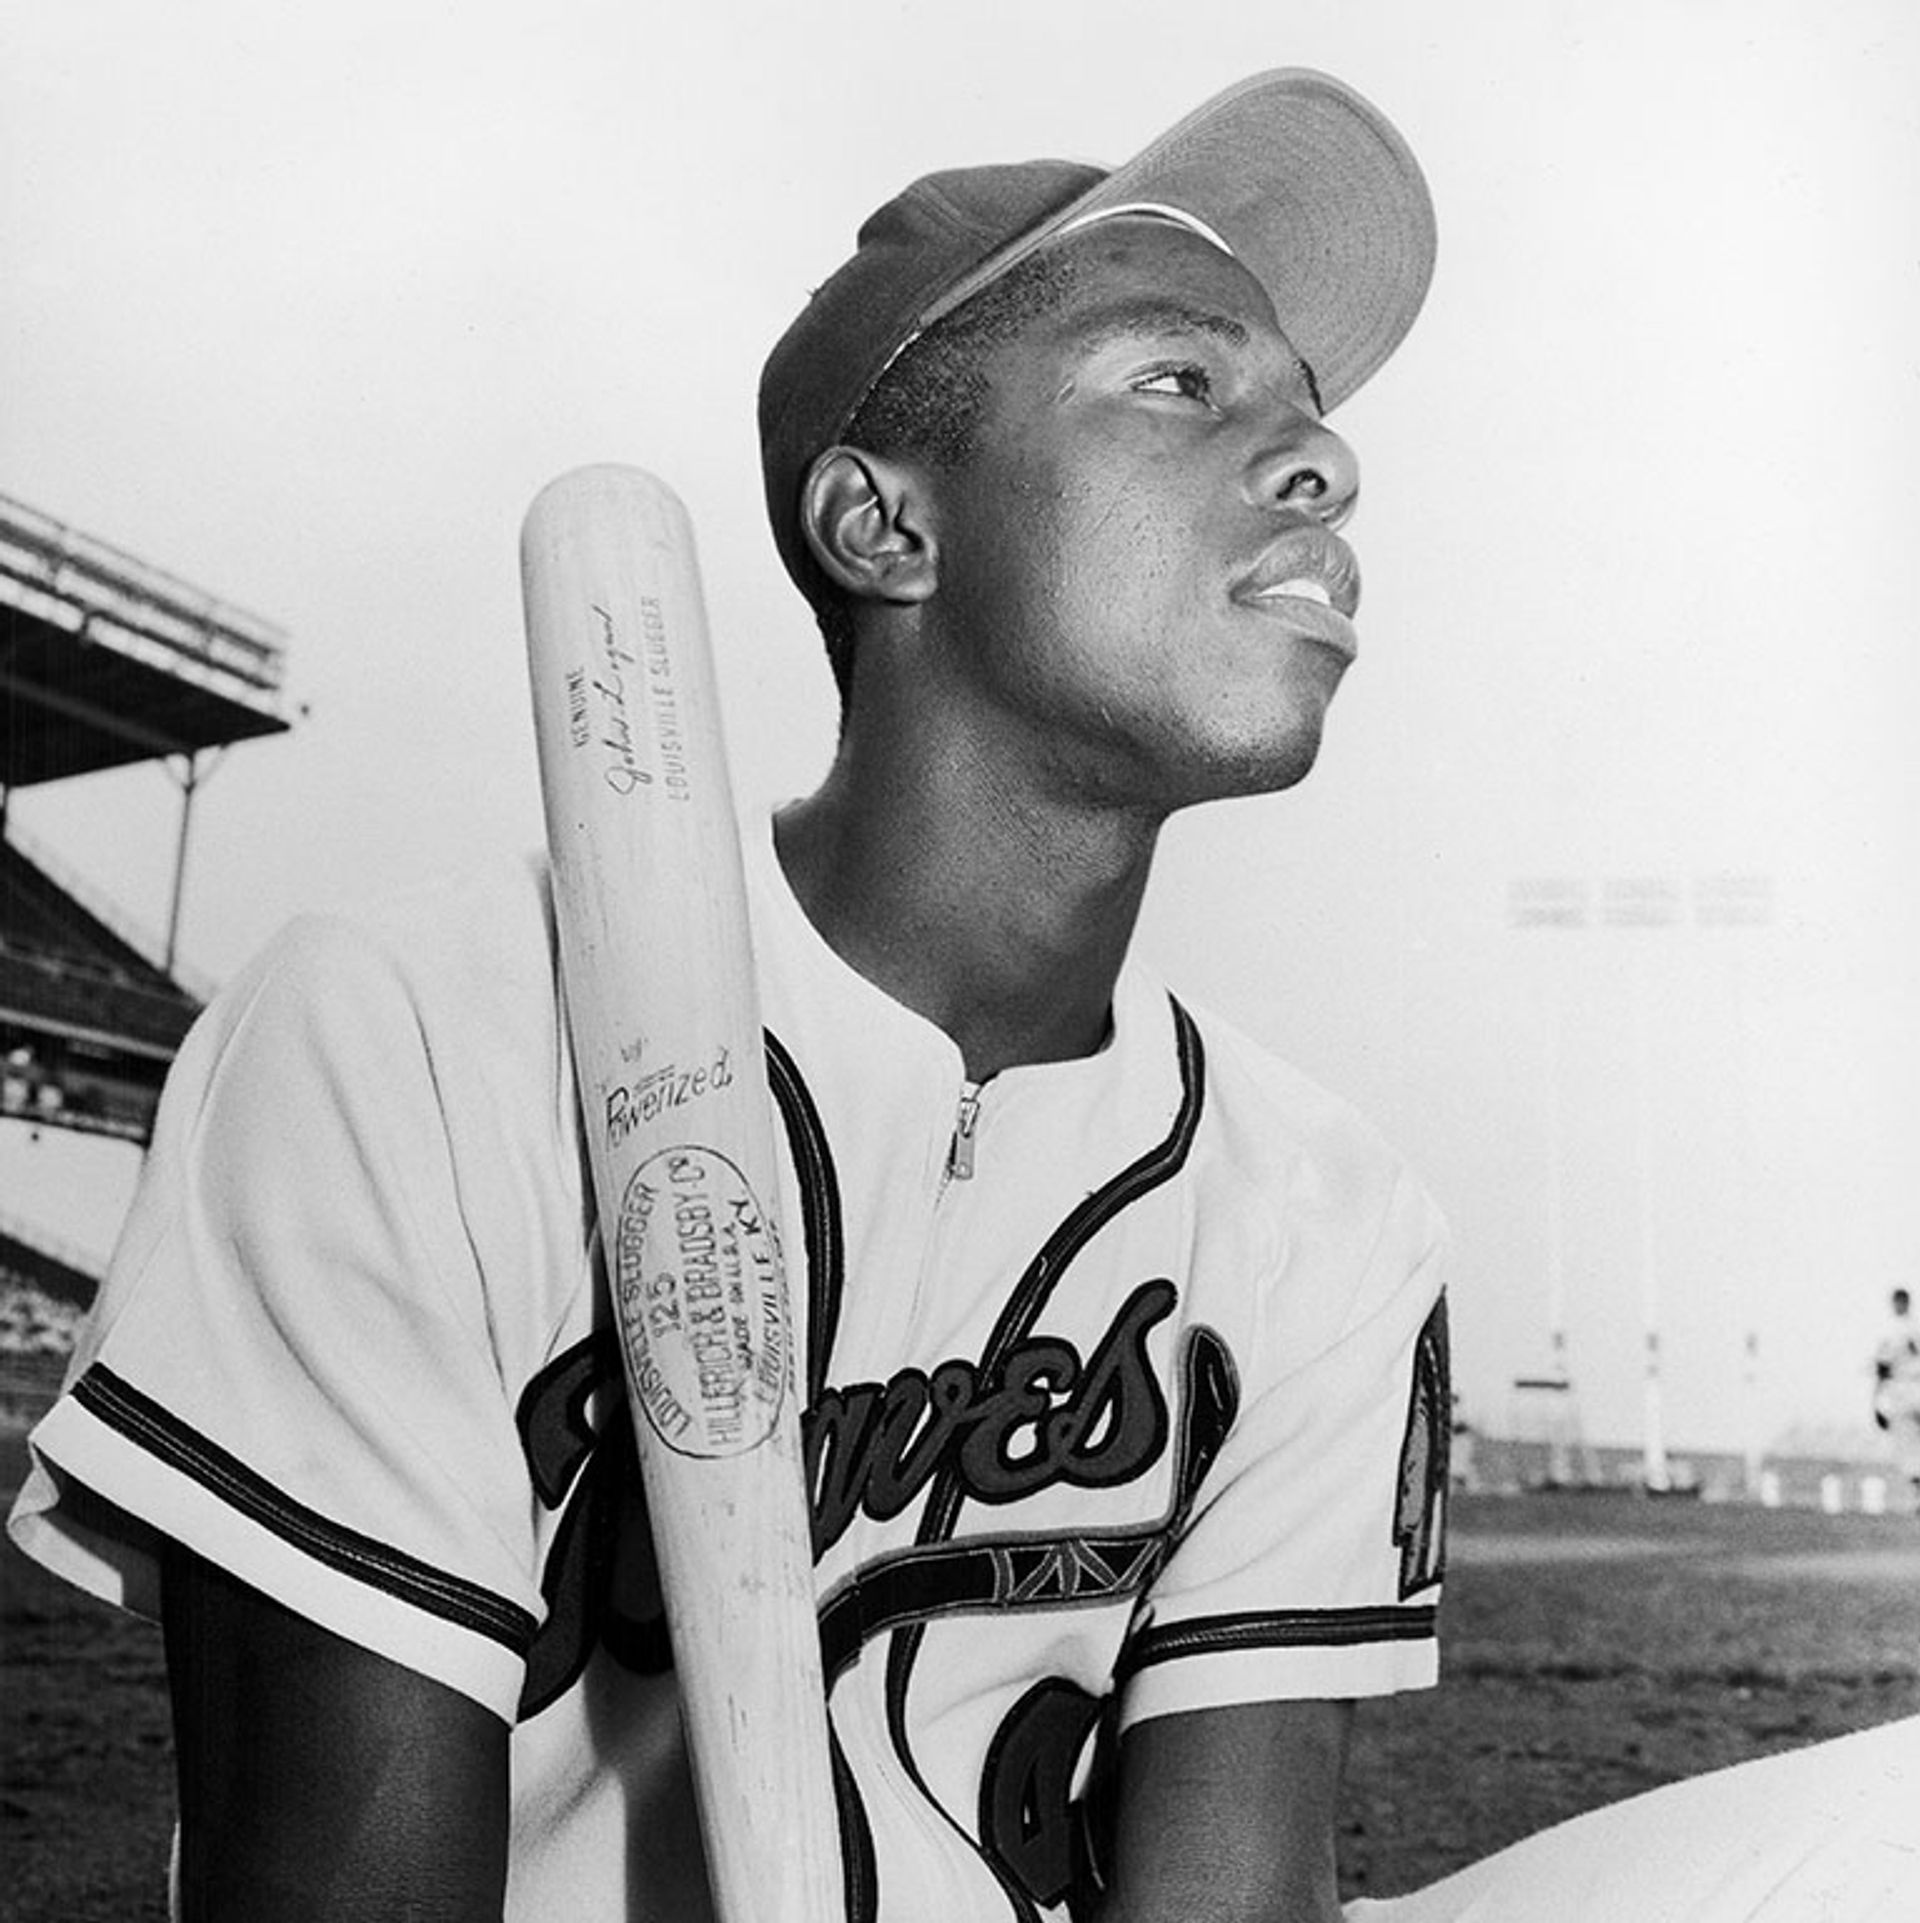 Hank Aaron at bat for the Milwaukee Braves in an undated photo David Jackson/Johnson Publishing Company